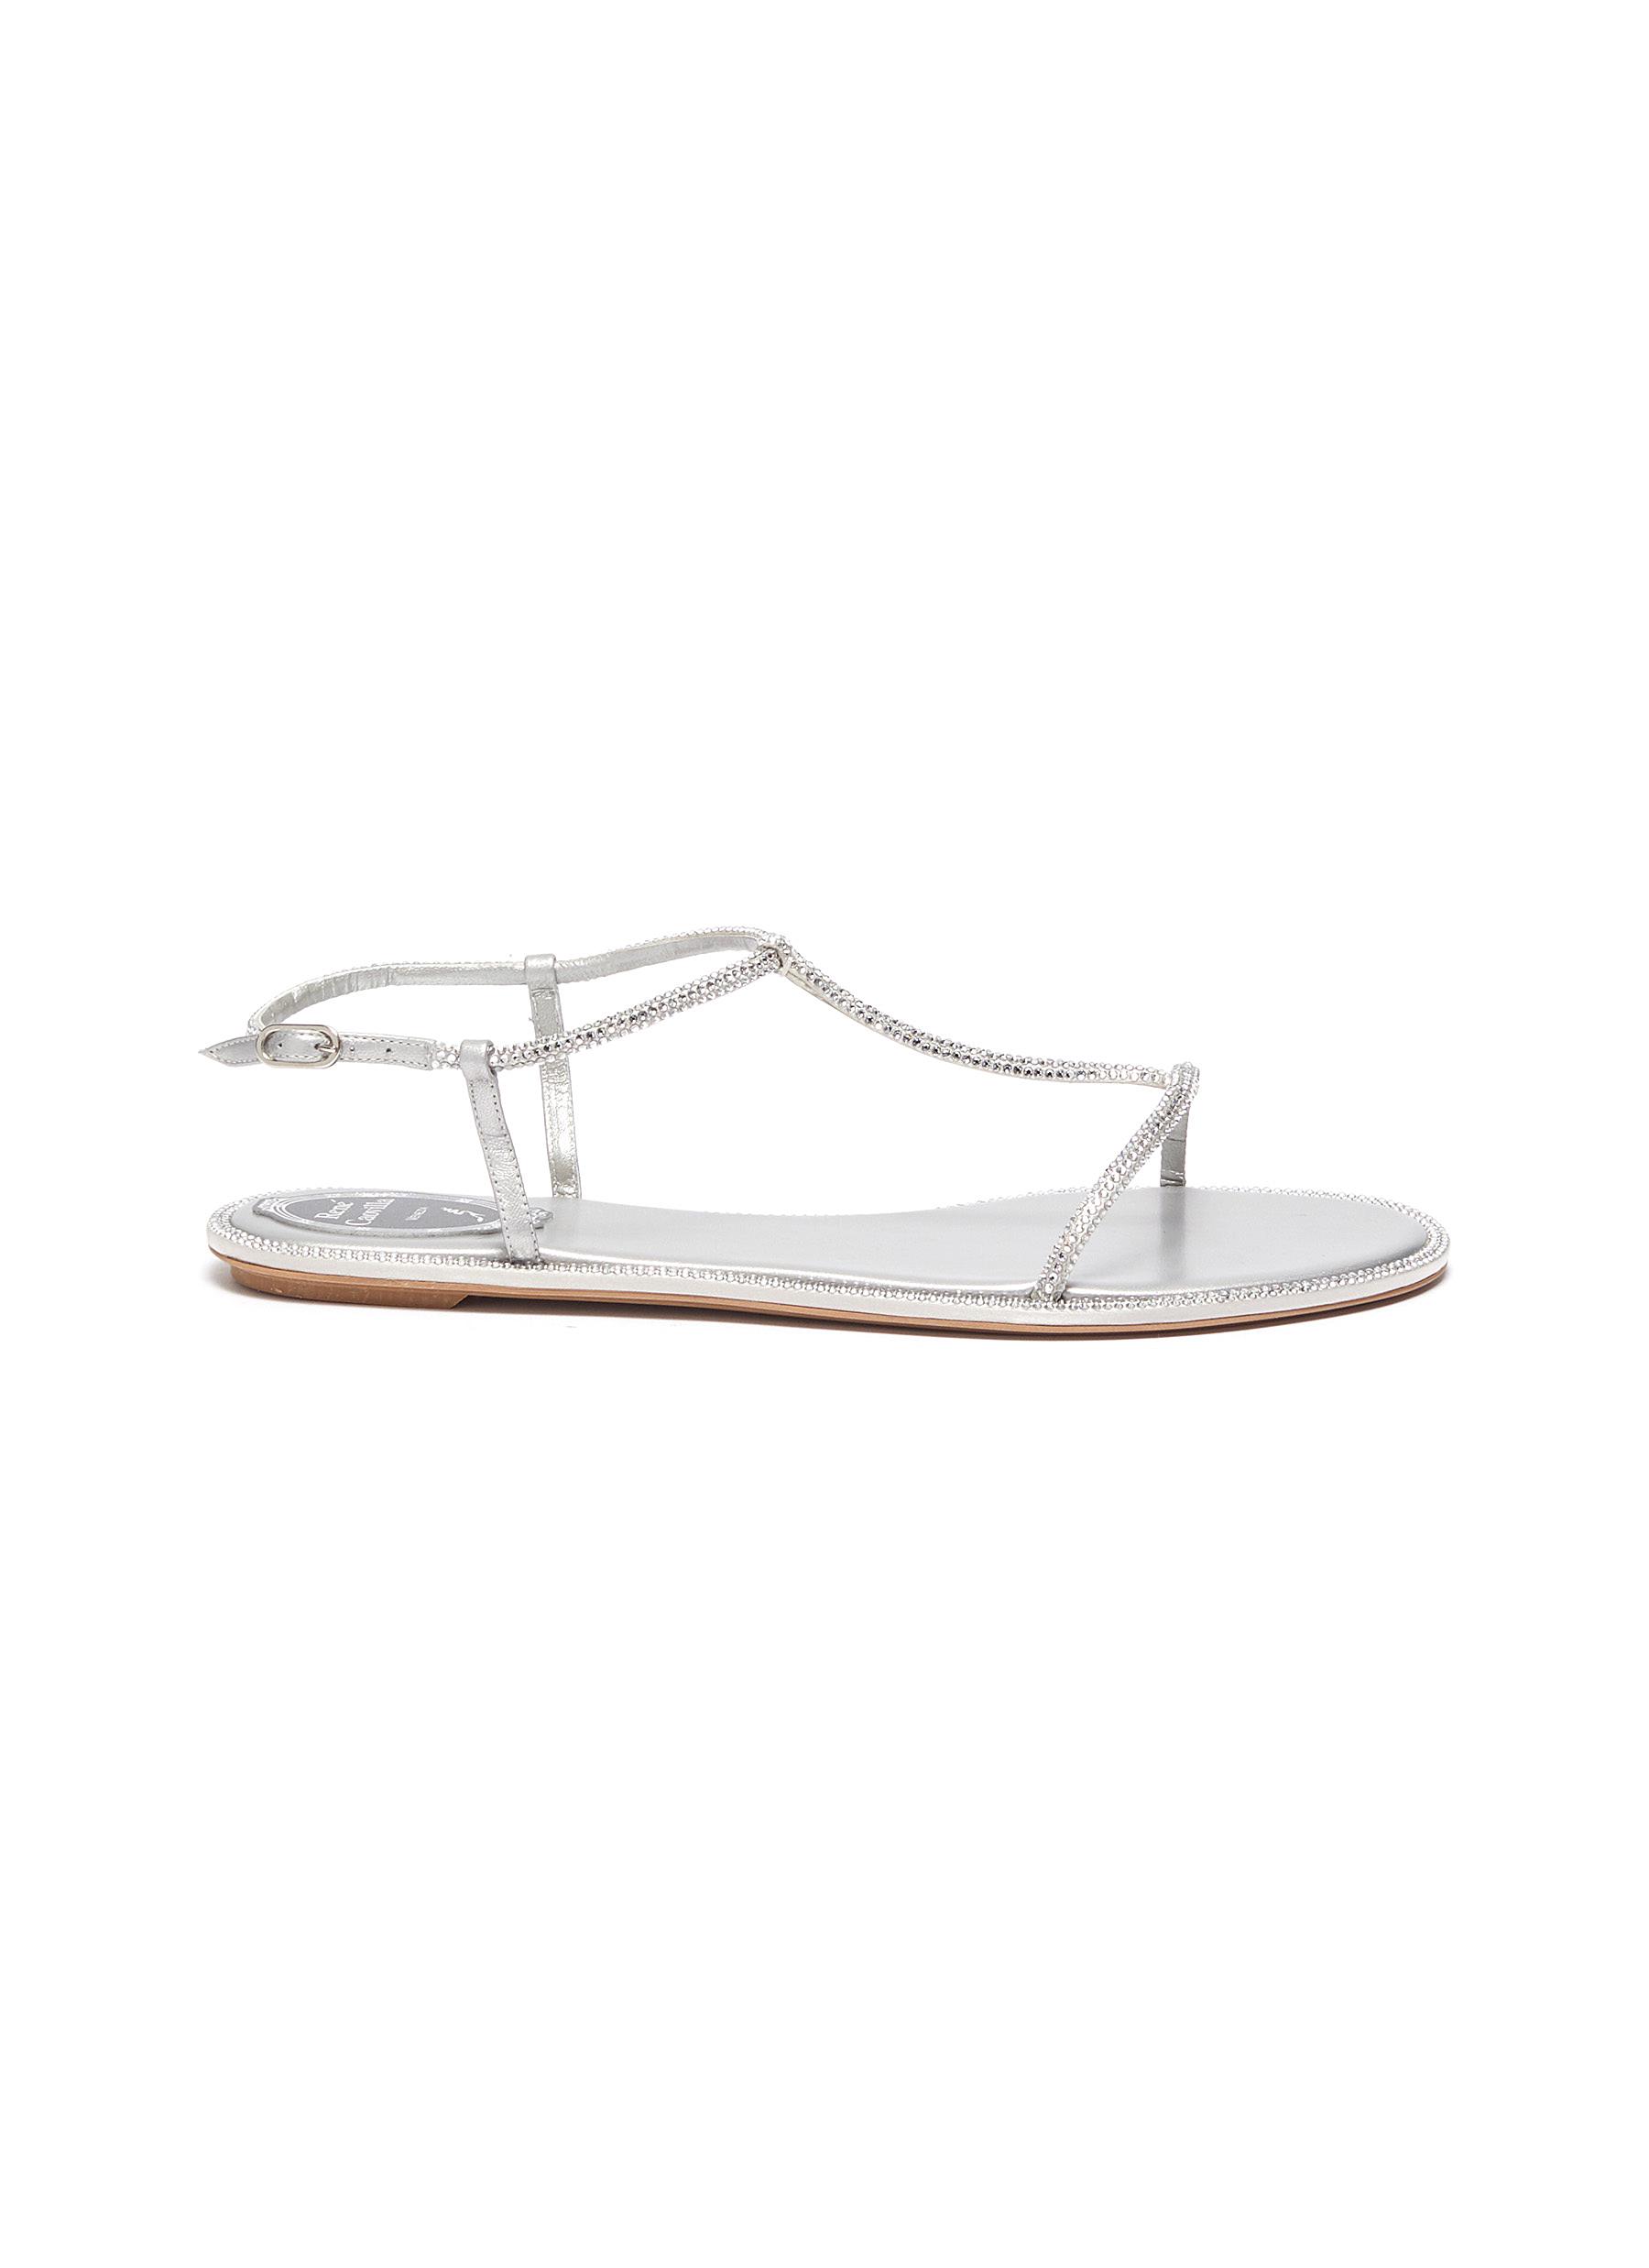 René Caovilla Flats Embellished satin strappy sandals